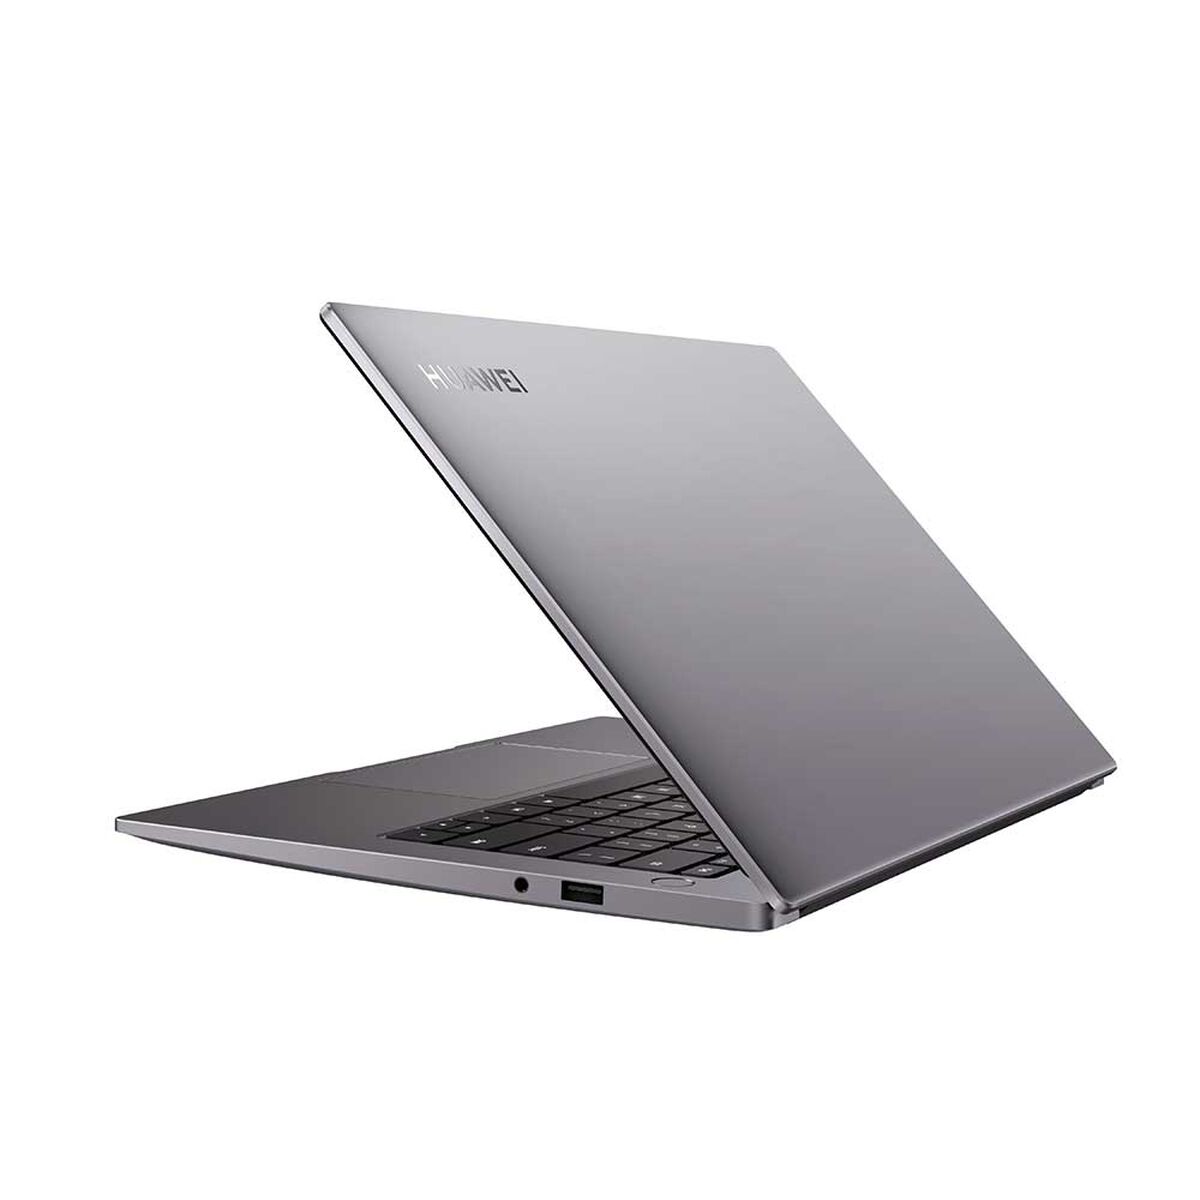 Notebook Huawei Matebook B3-420 Core i5 8GB 512GB SSD 14"